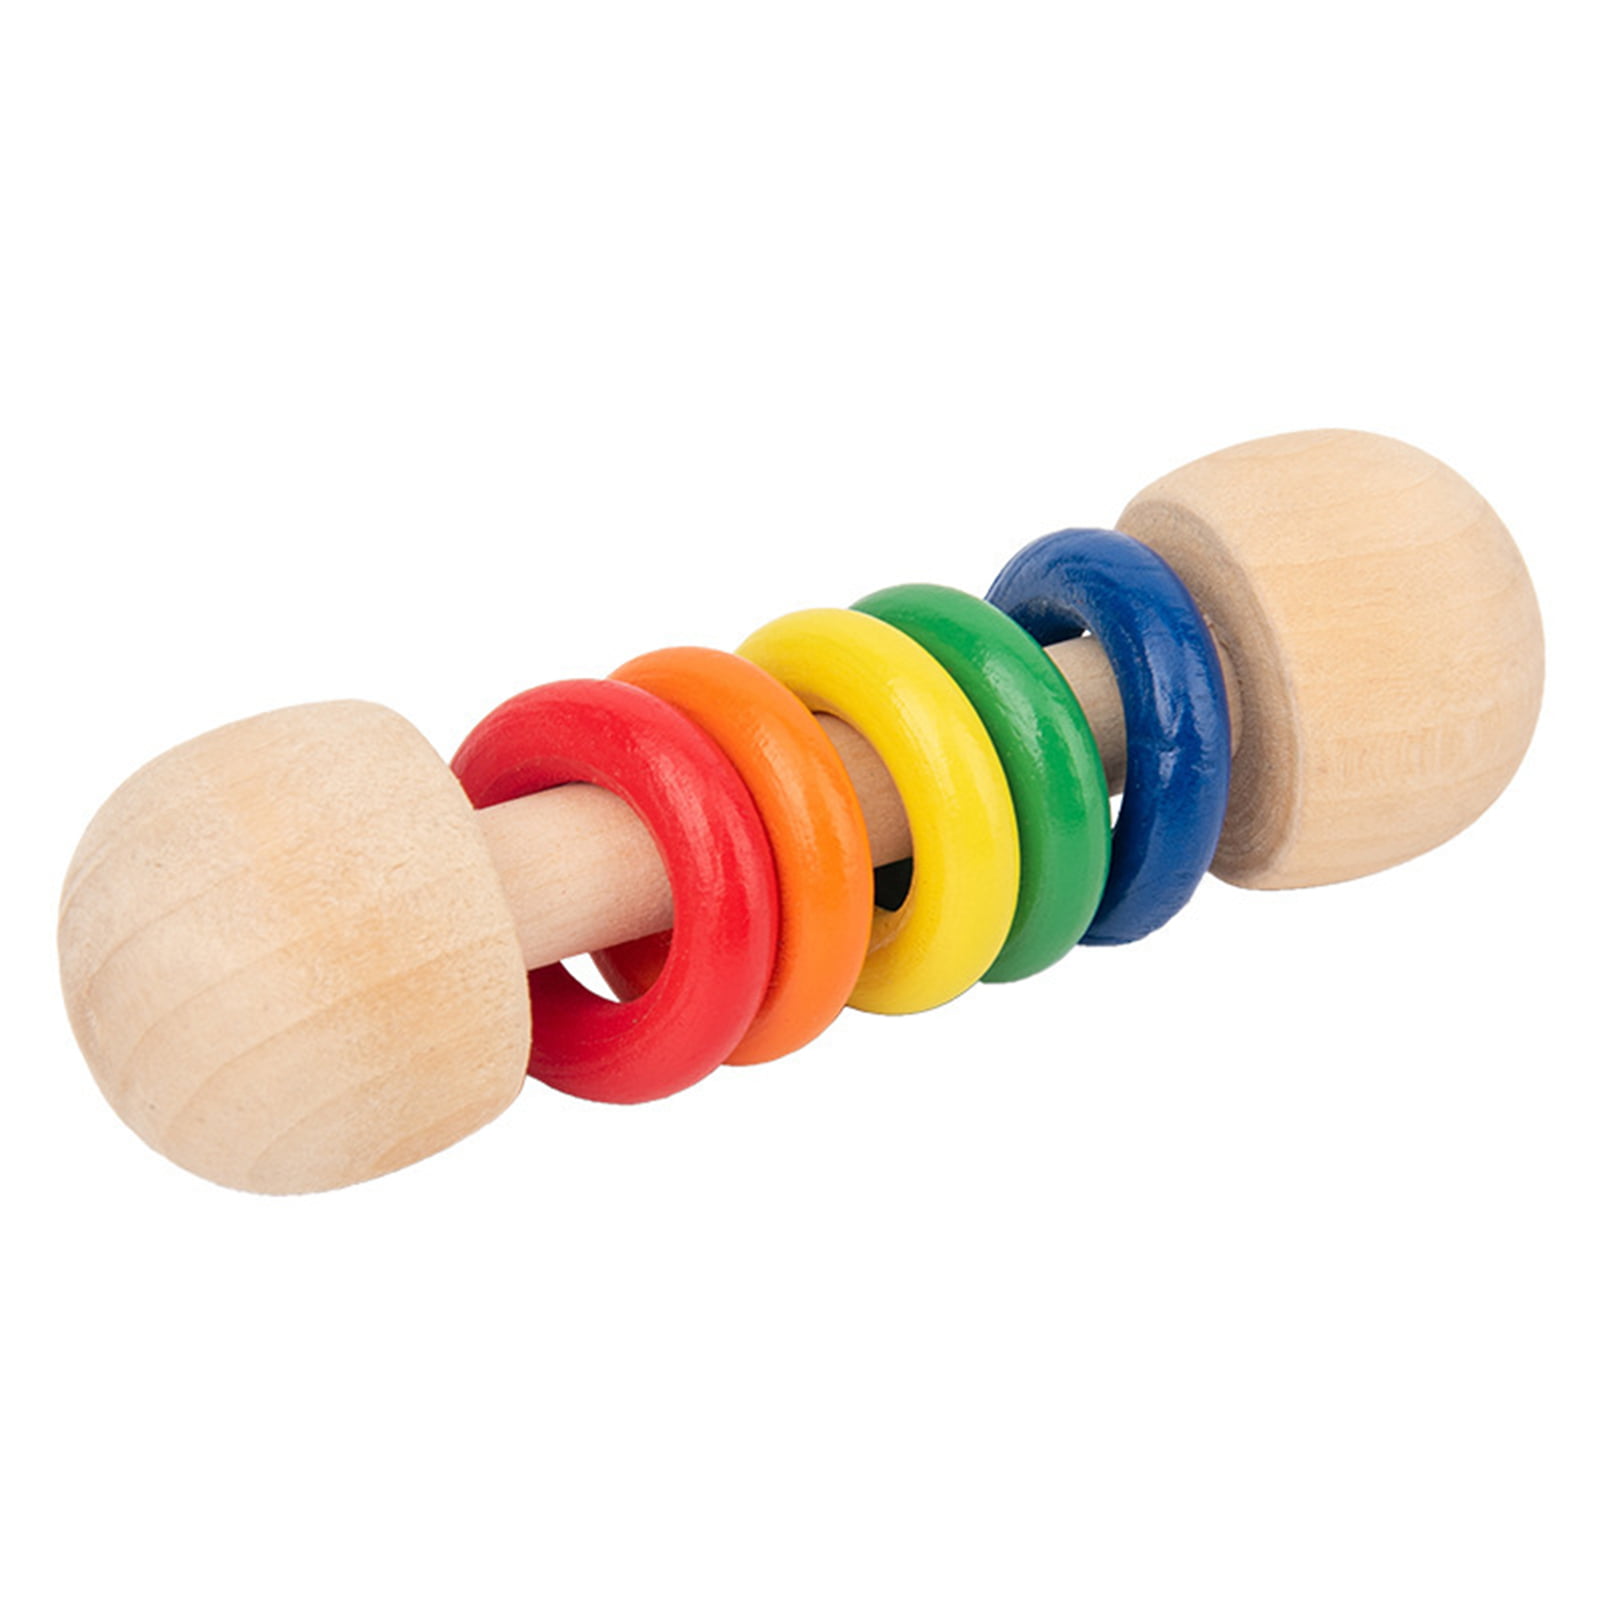 5PCS Natural Wooden Rattle Teether Baby Montessori Developmental Shaker Toy 